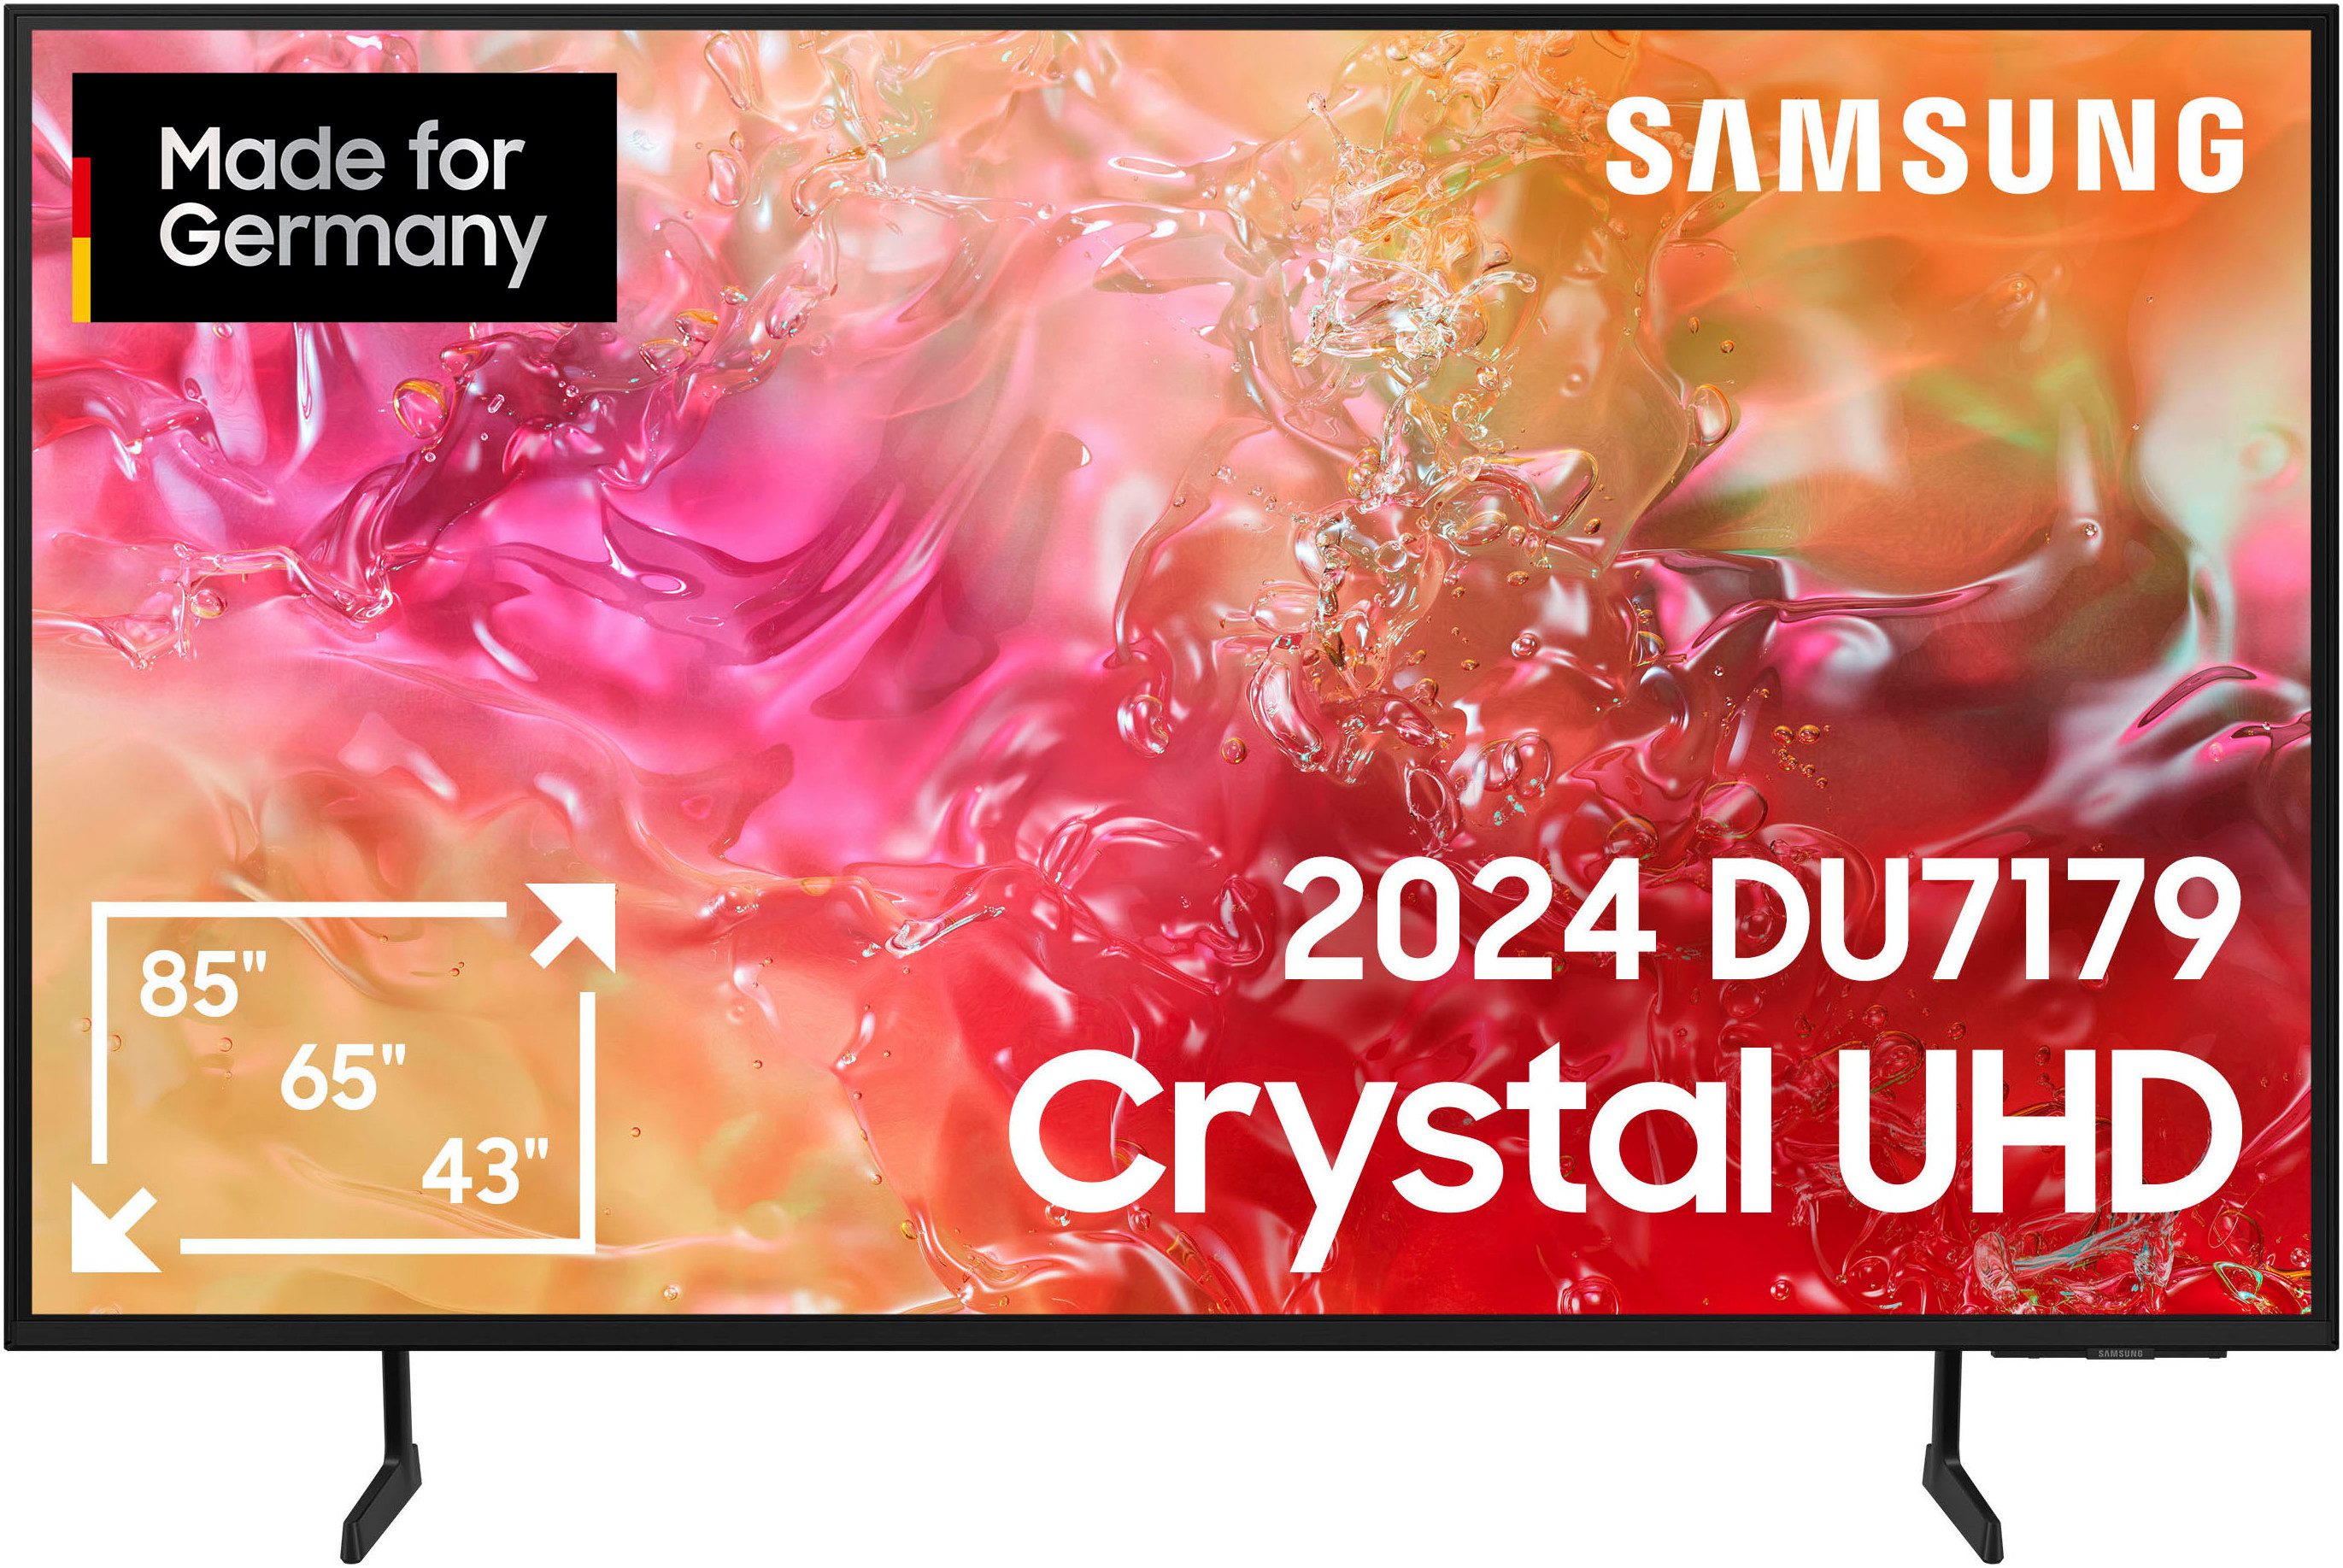 Samsung Crystal UHD 4K DU7179 LED-TV 214 cm 85 inch Energielabel F (A G) CI+*, DVB-C, DVB-S2, DVB-T2